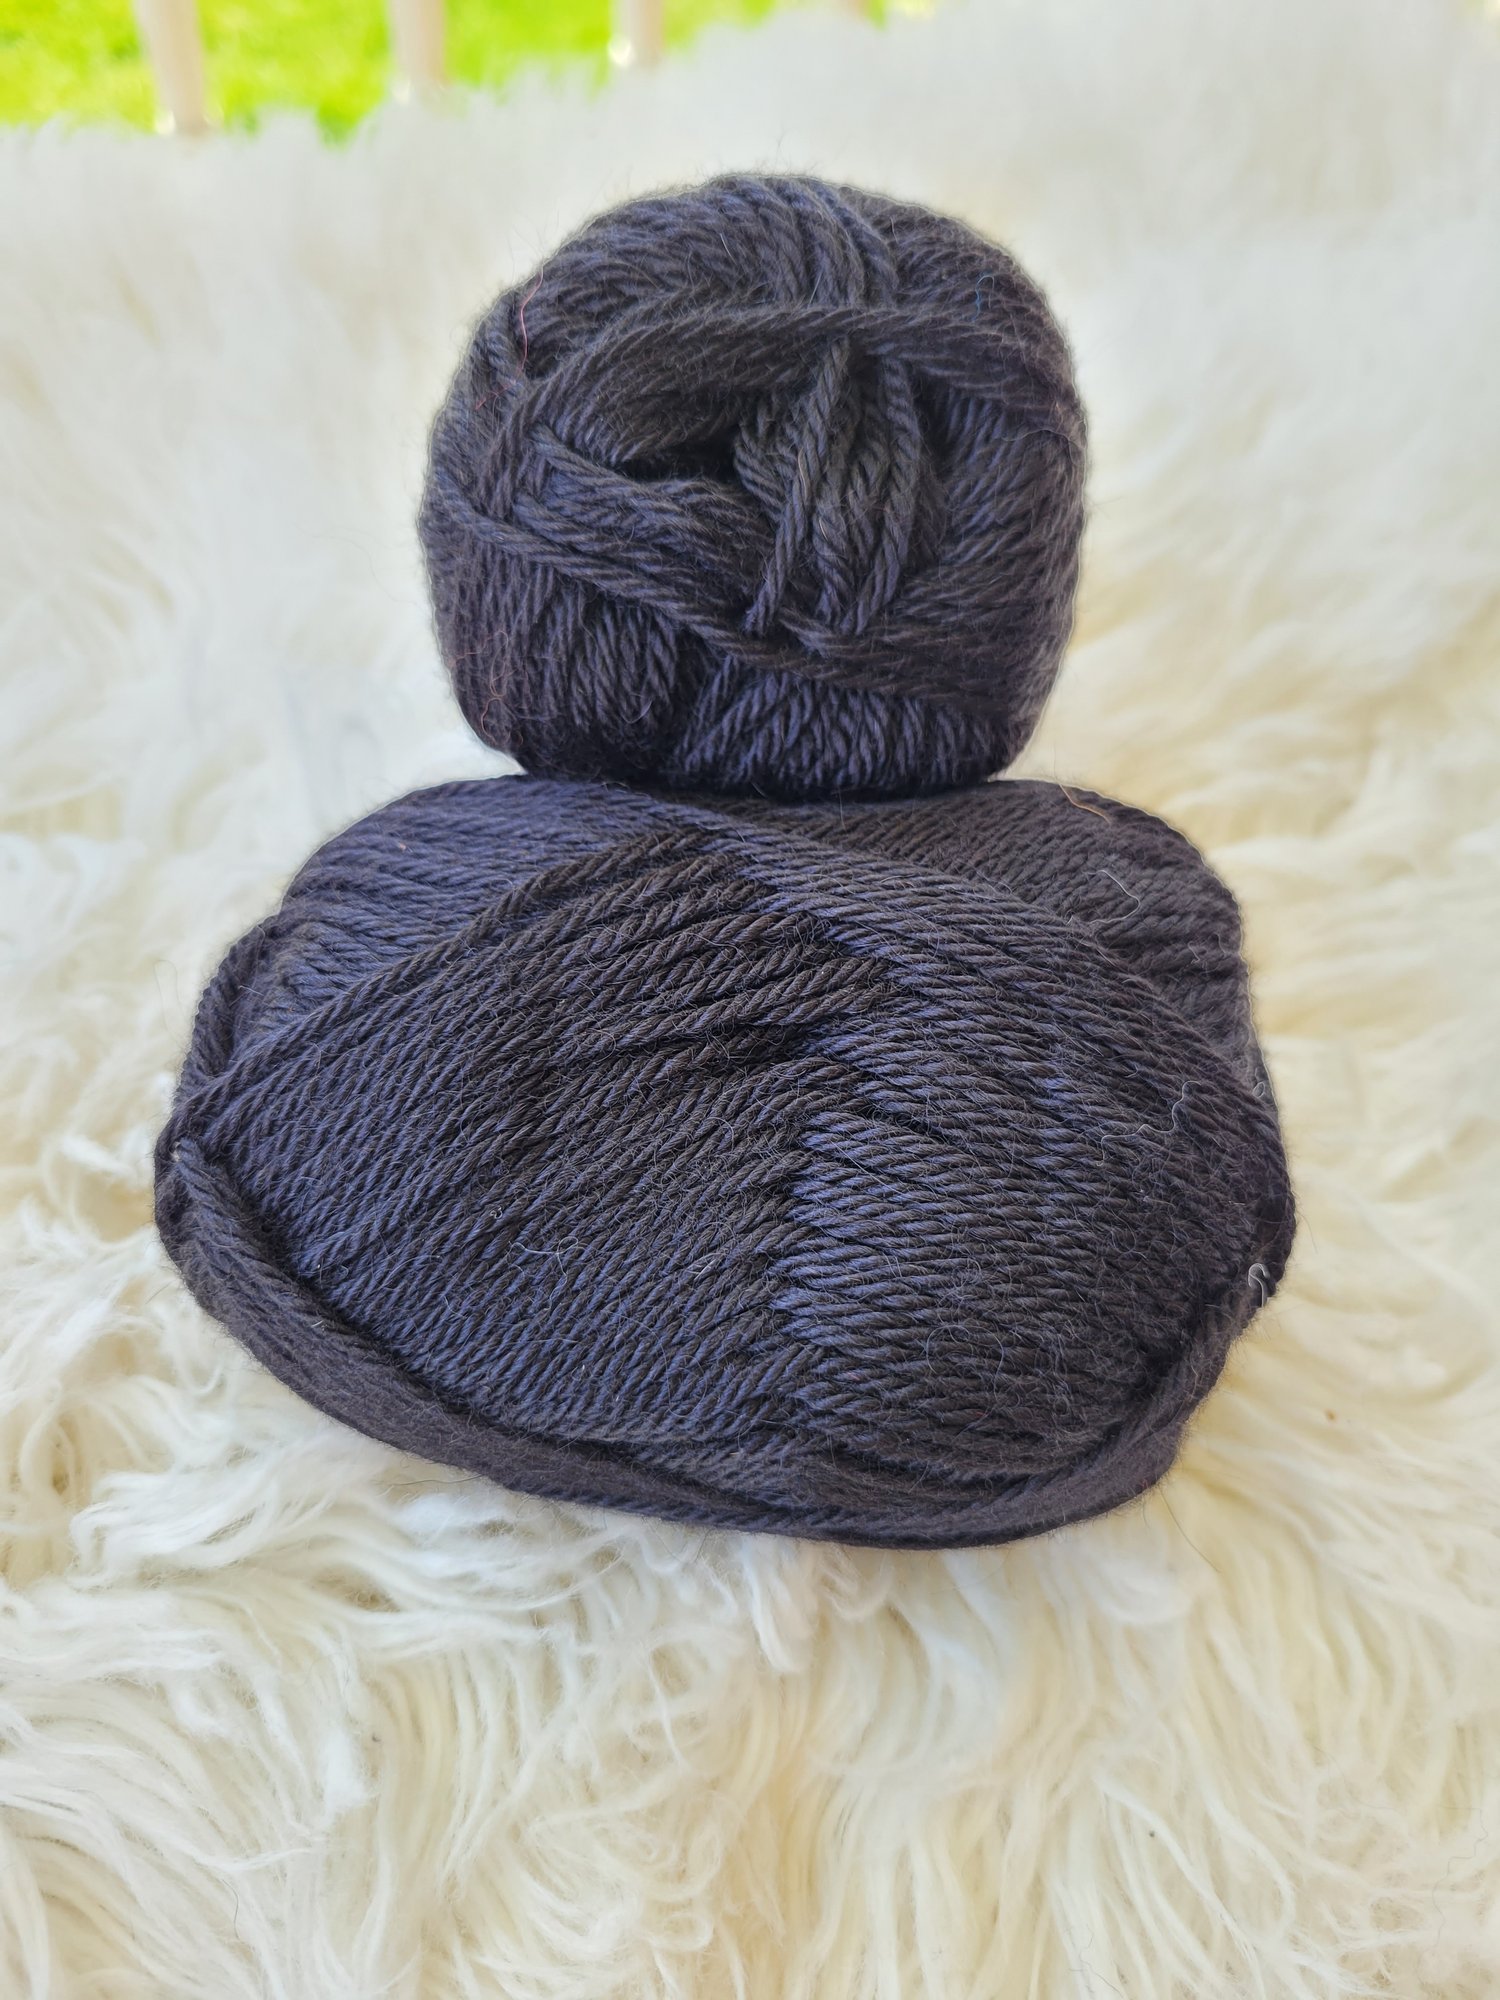 DK weight, soft baby alpaca yarn for hand knitting, crochet, weaving. —  Lancaster Yarn Shop